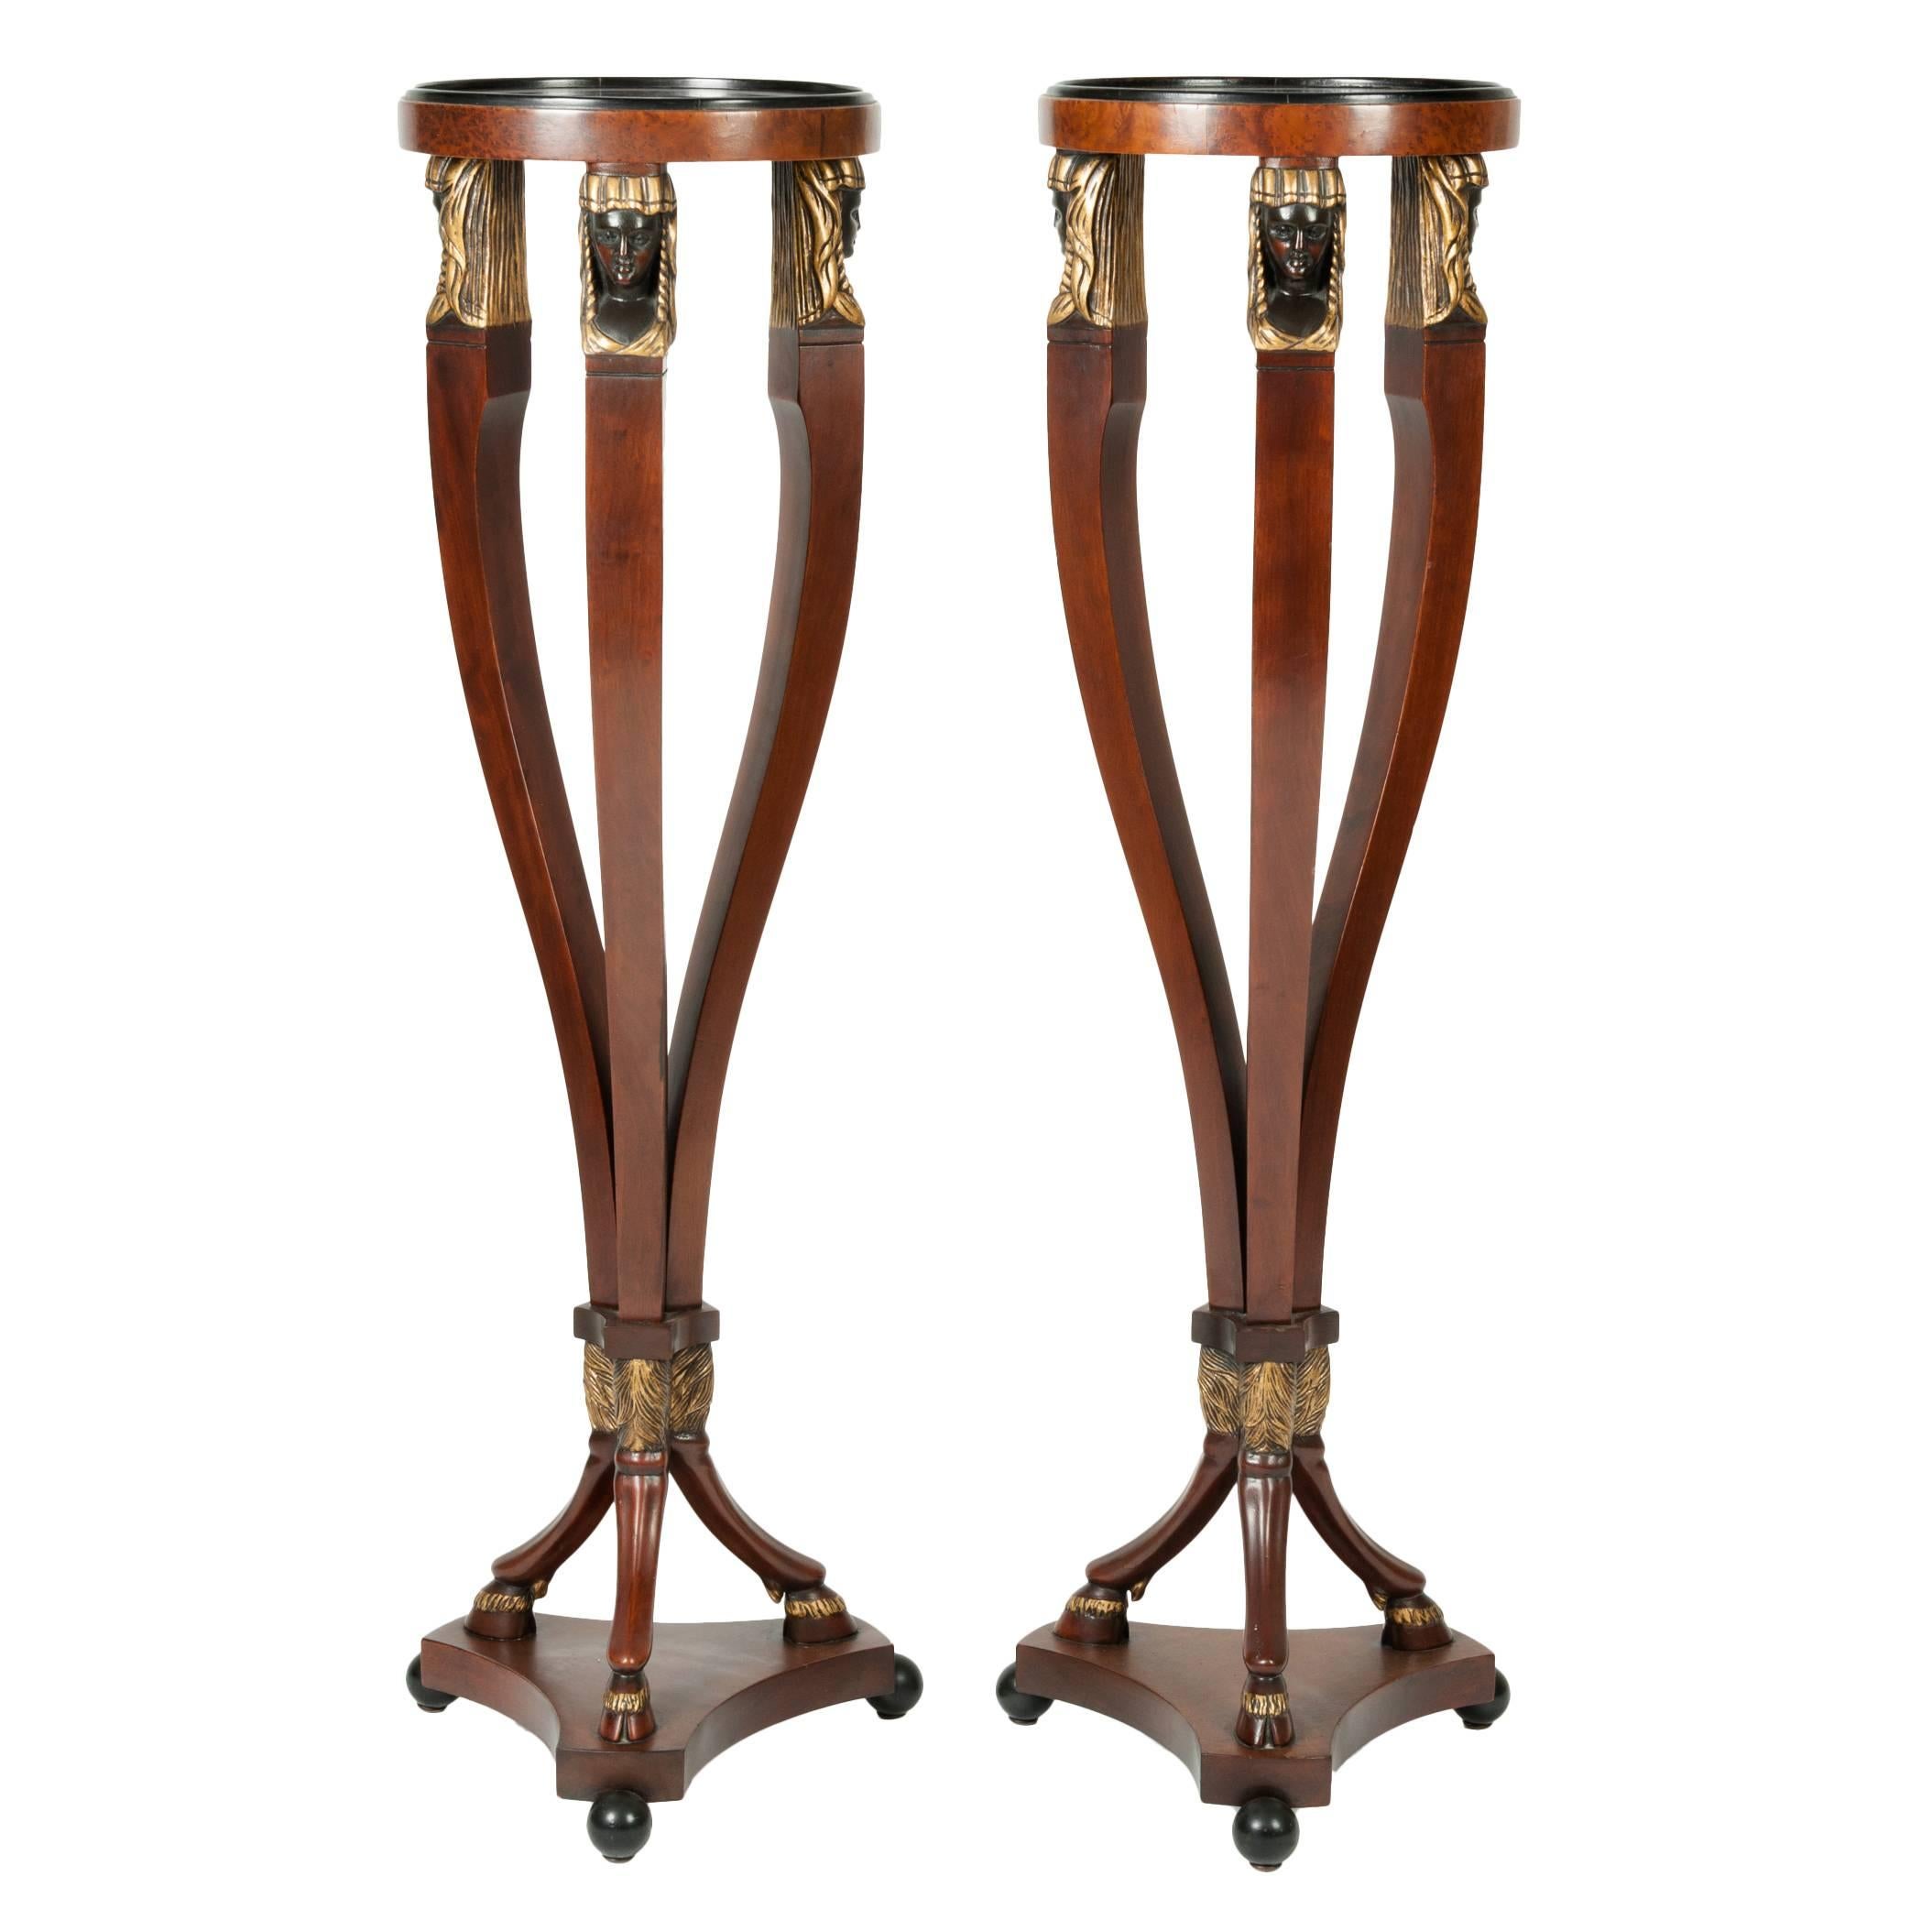 Vintage Pair of Tall Pedestal Tables